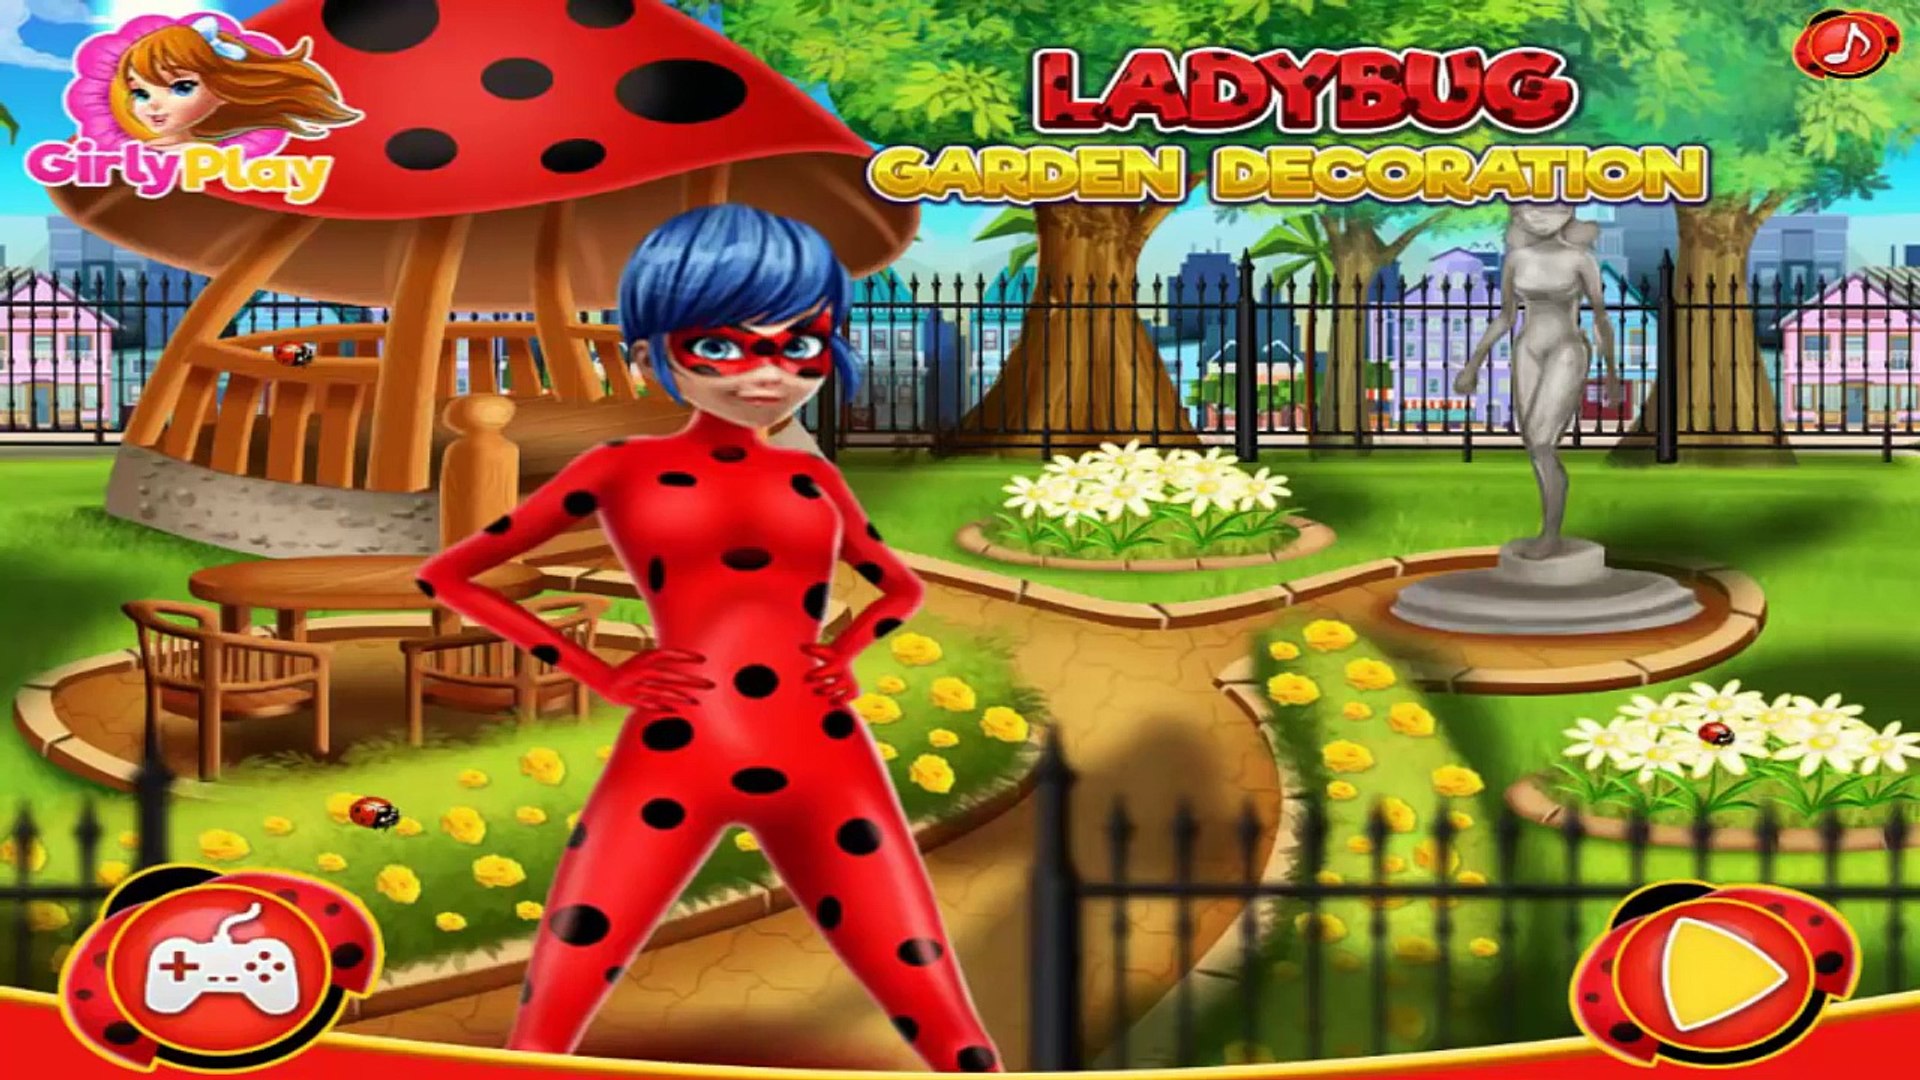 Ladybug Garden Decoration - Miraculous Ladybug and Cat Noir Games